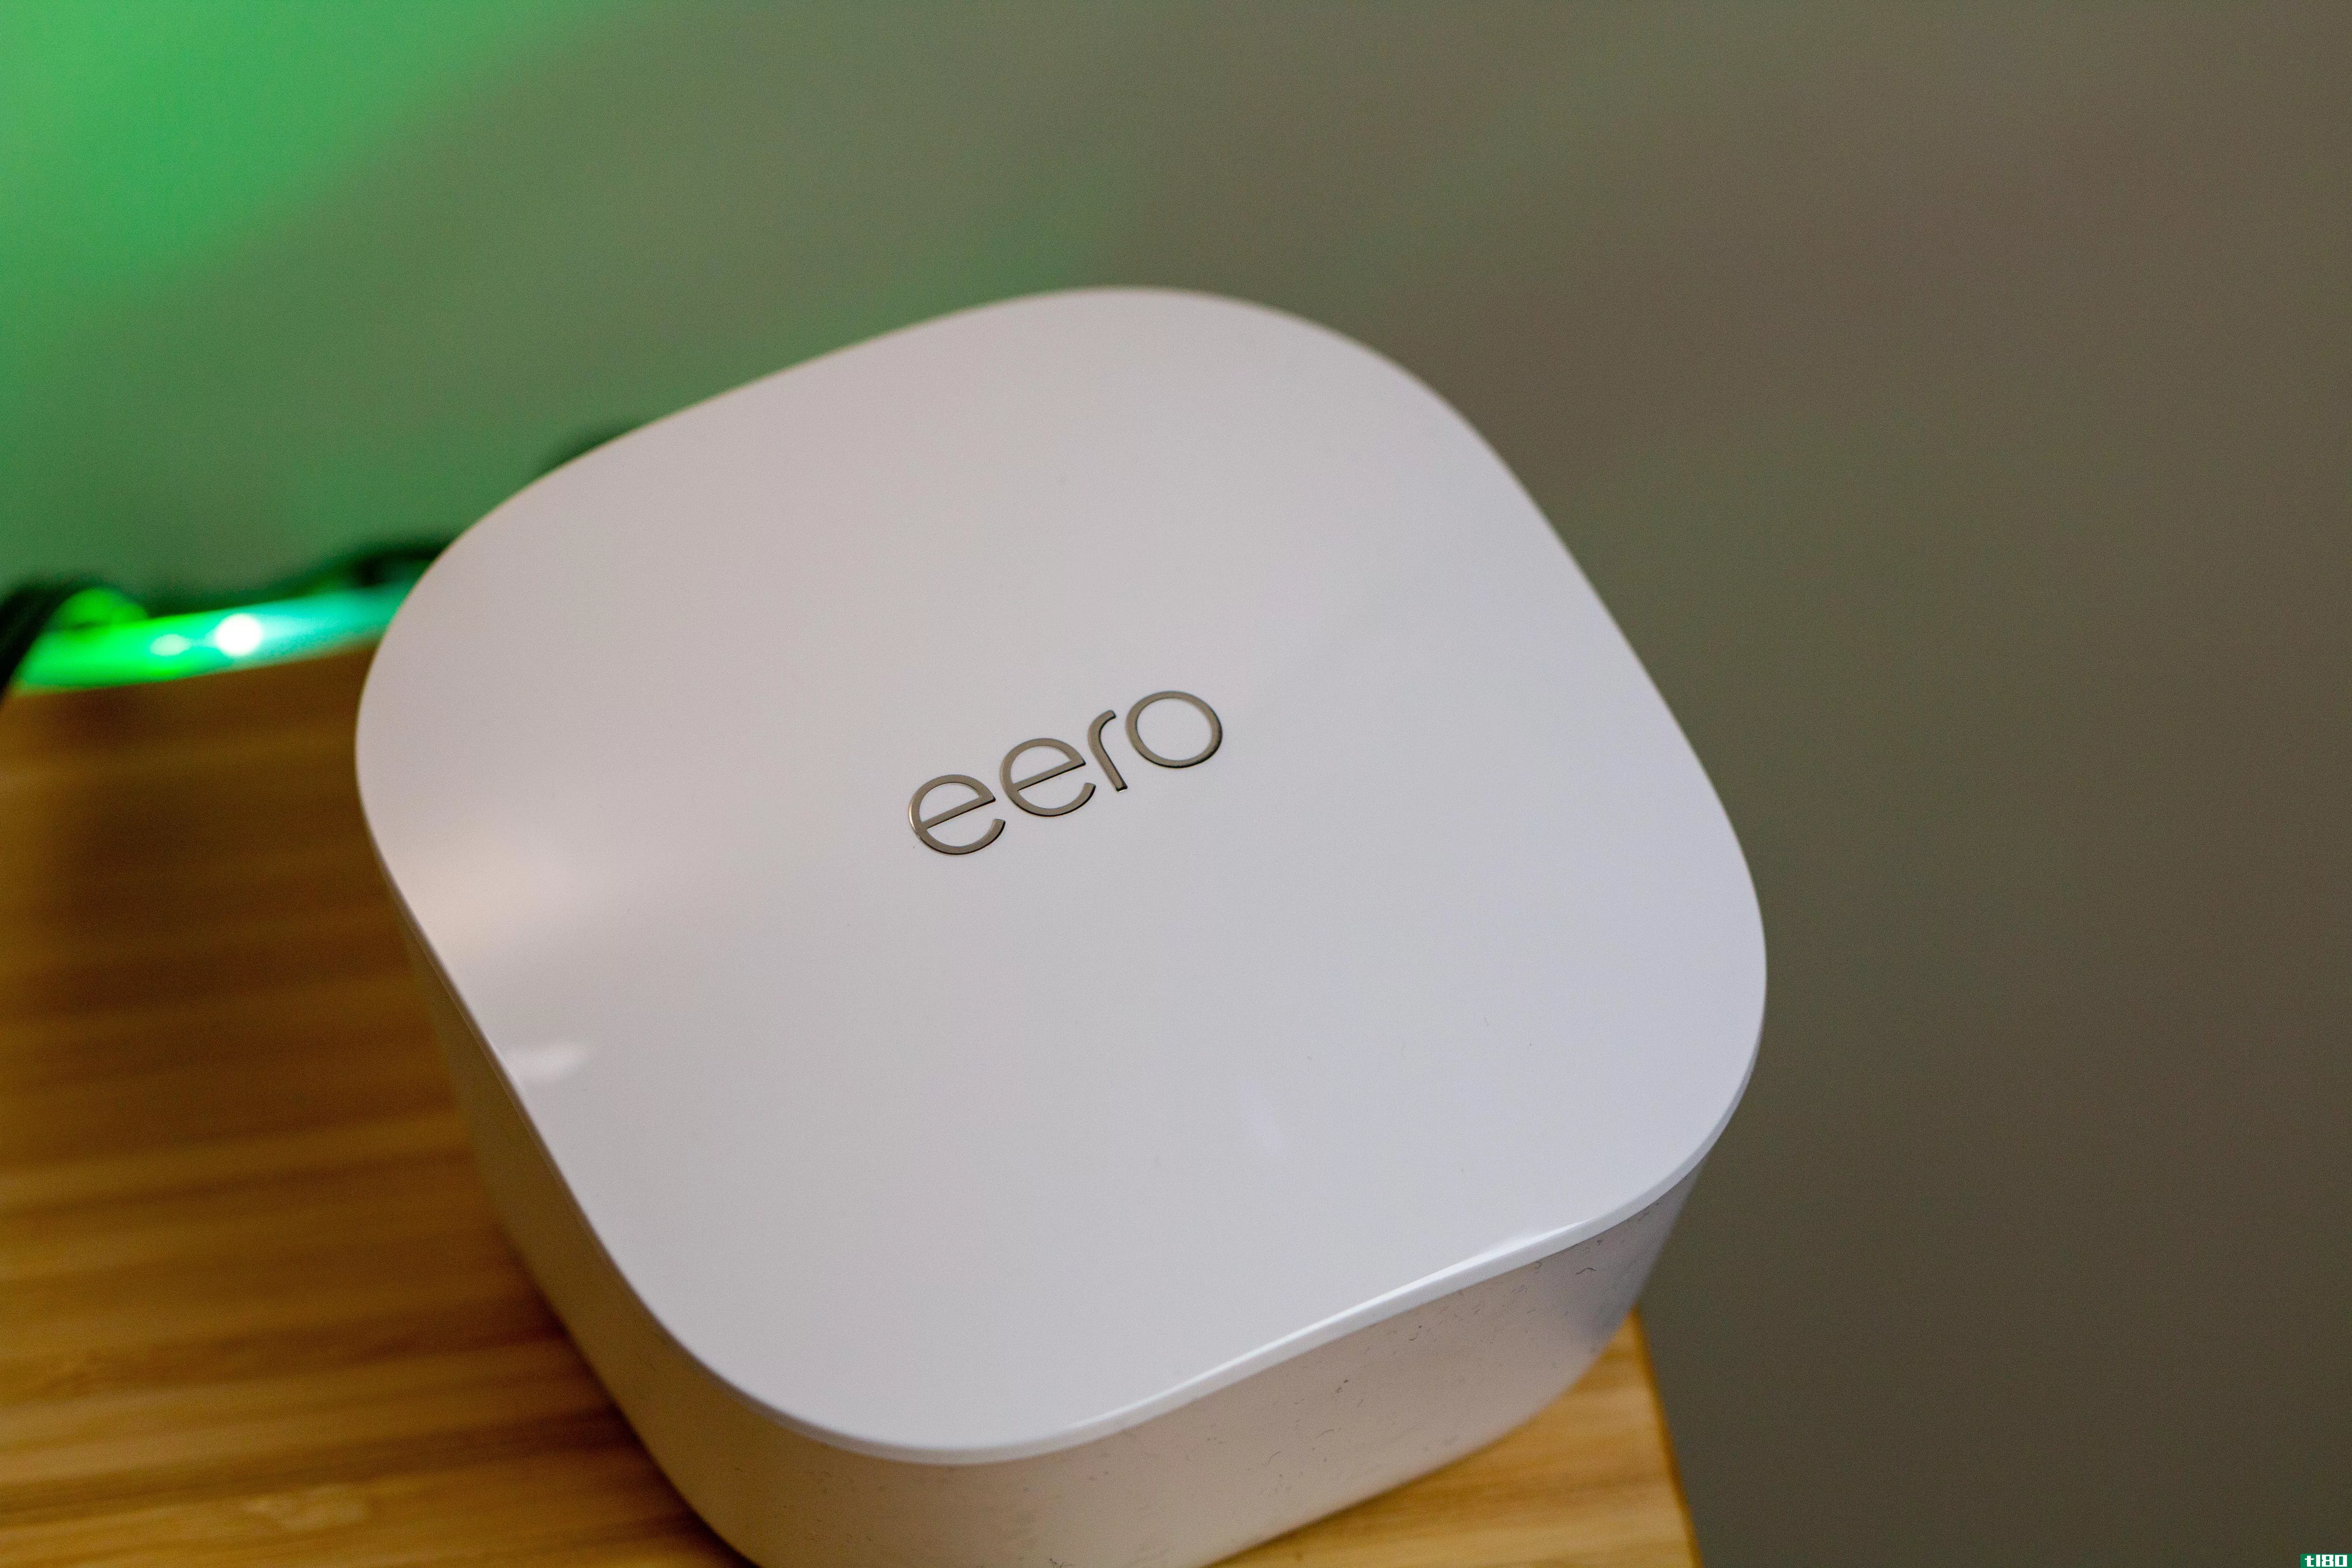 Eero Satellite Router